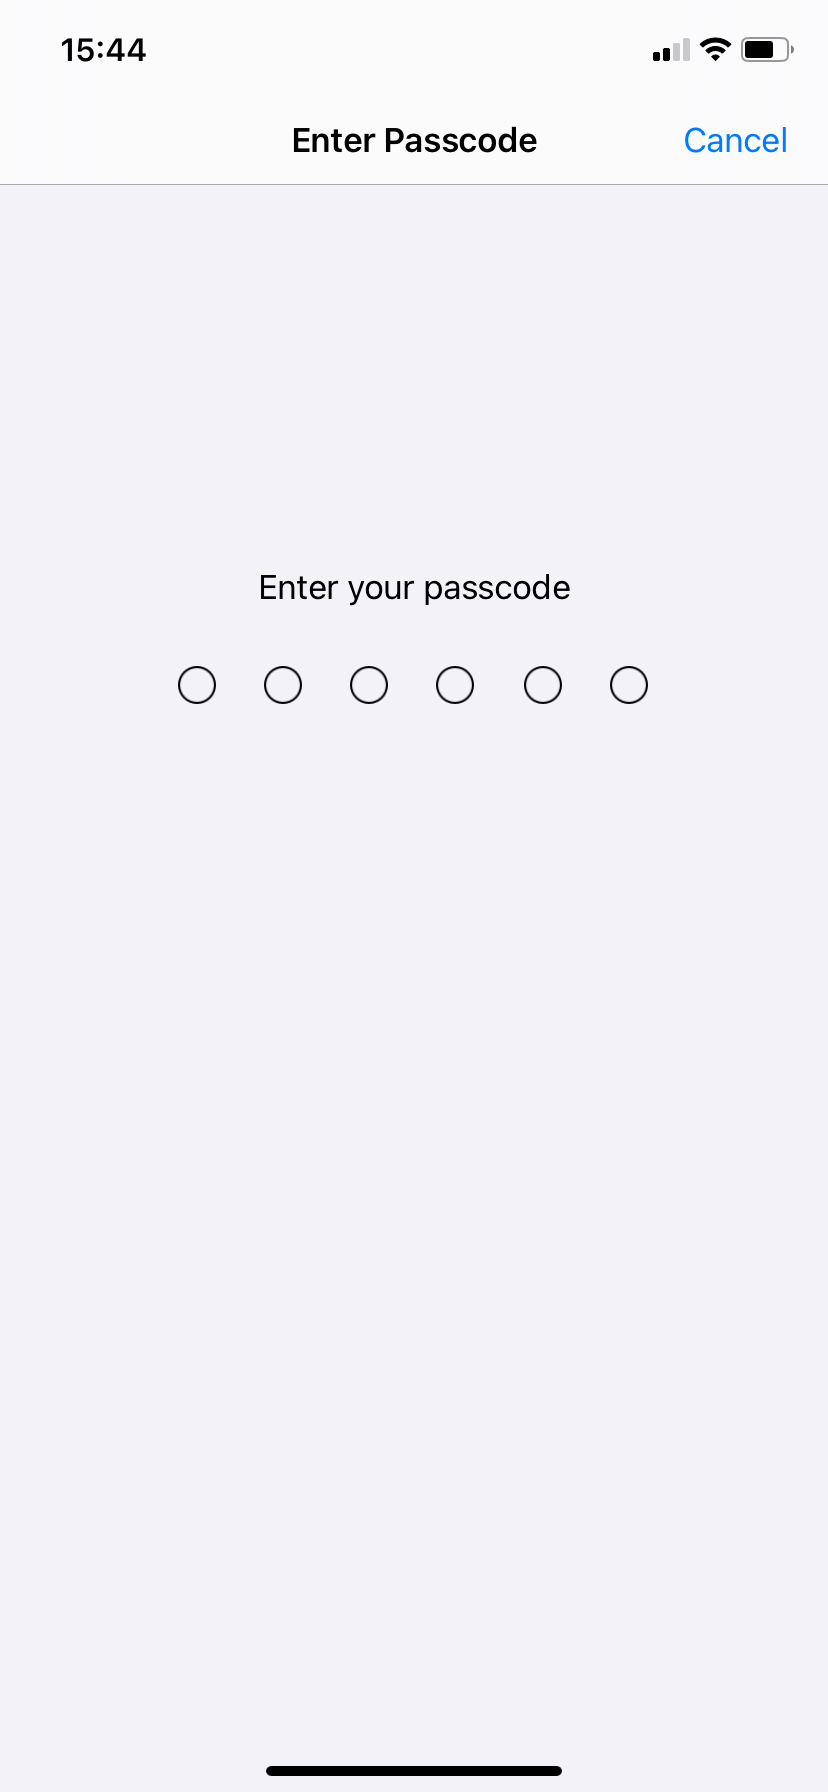 Passcode prompt iOS 14